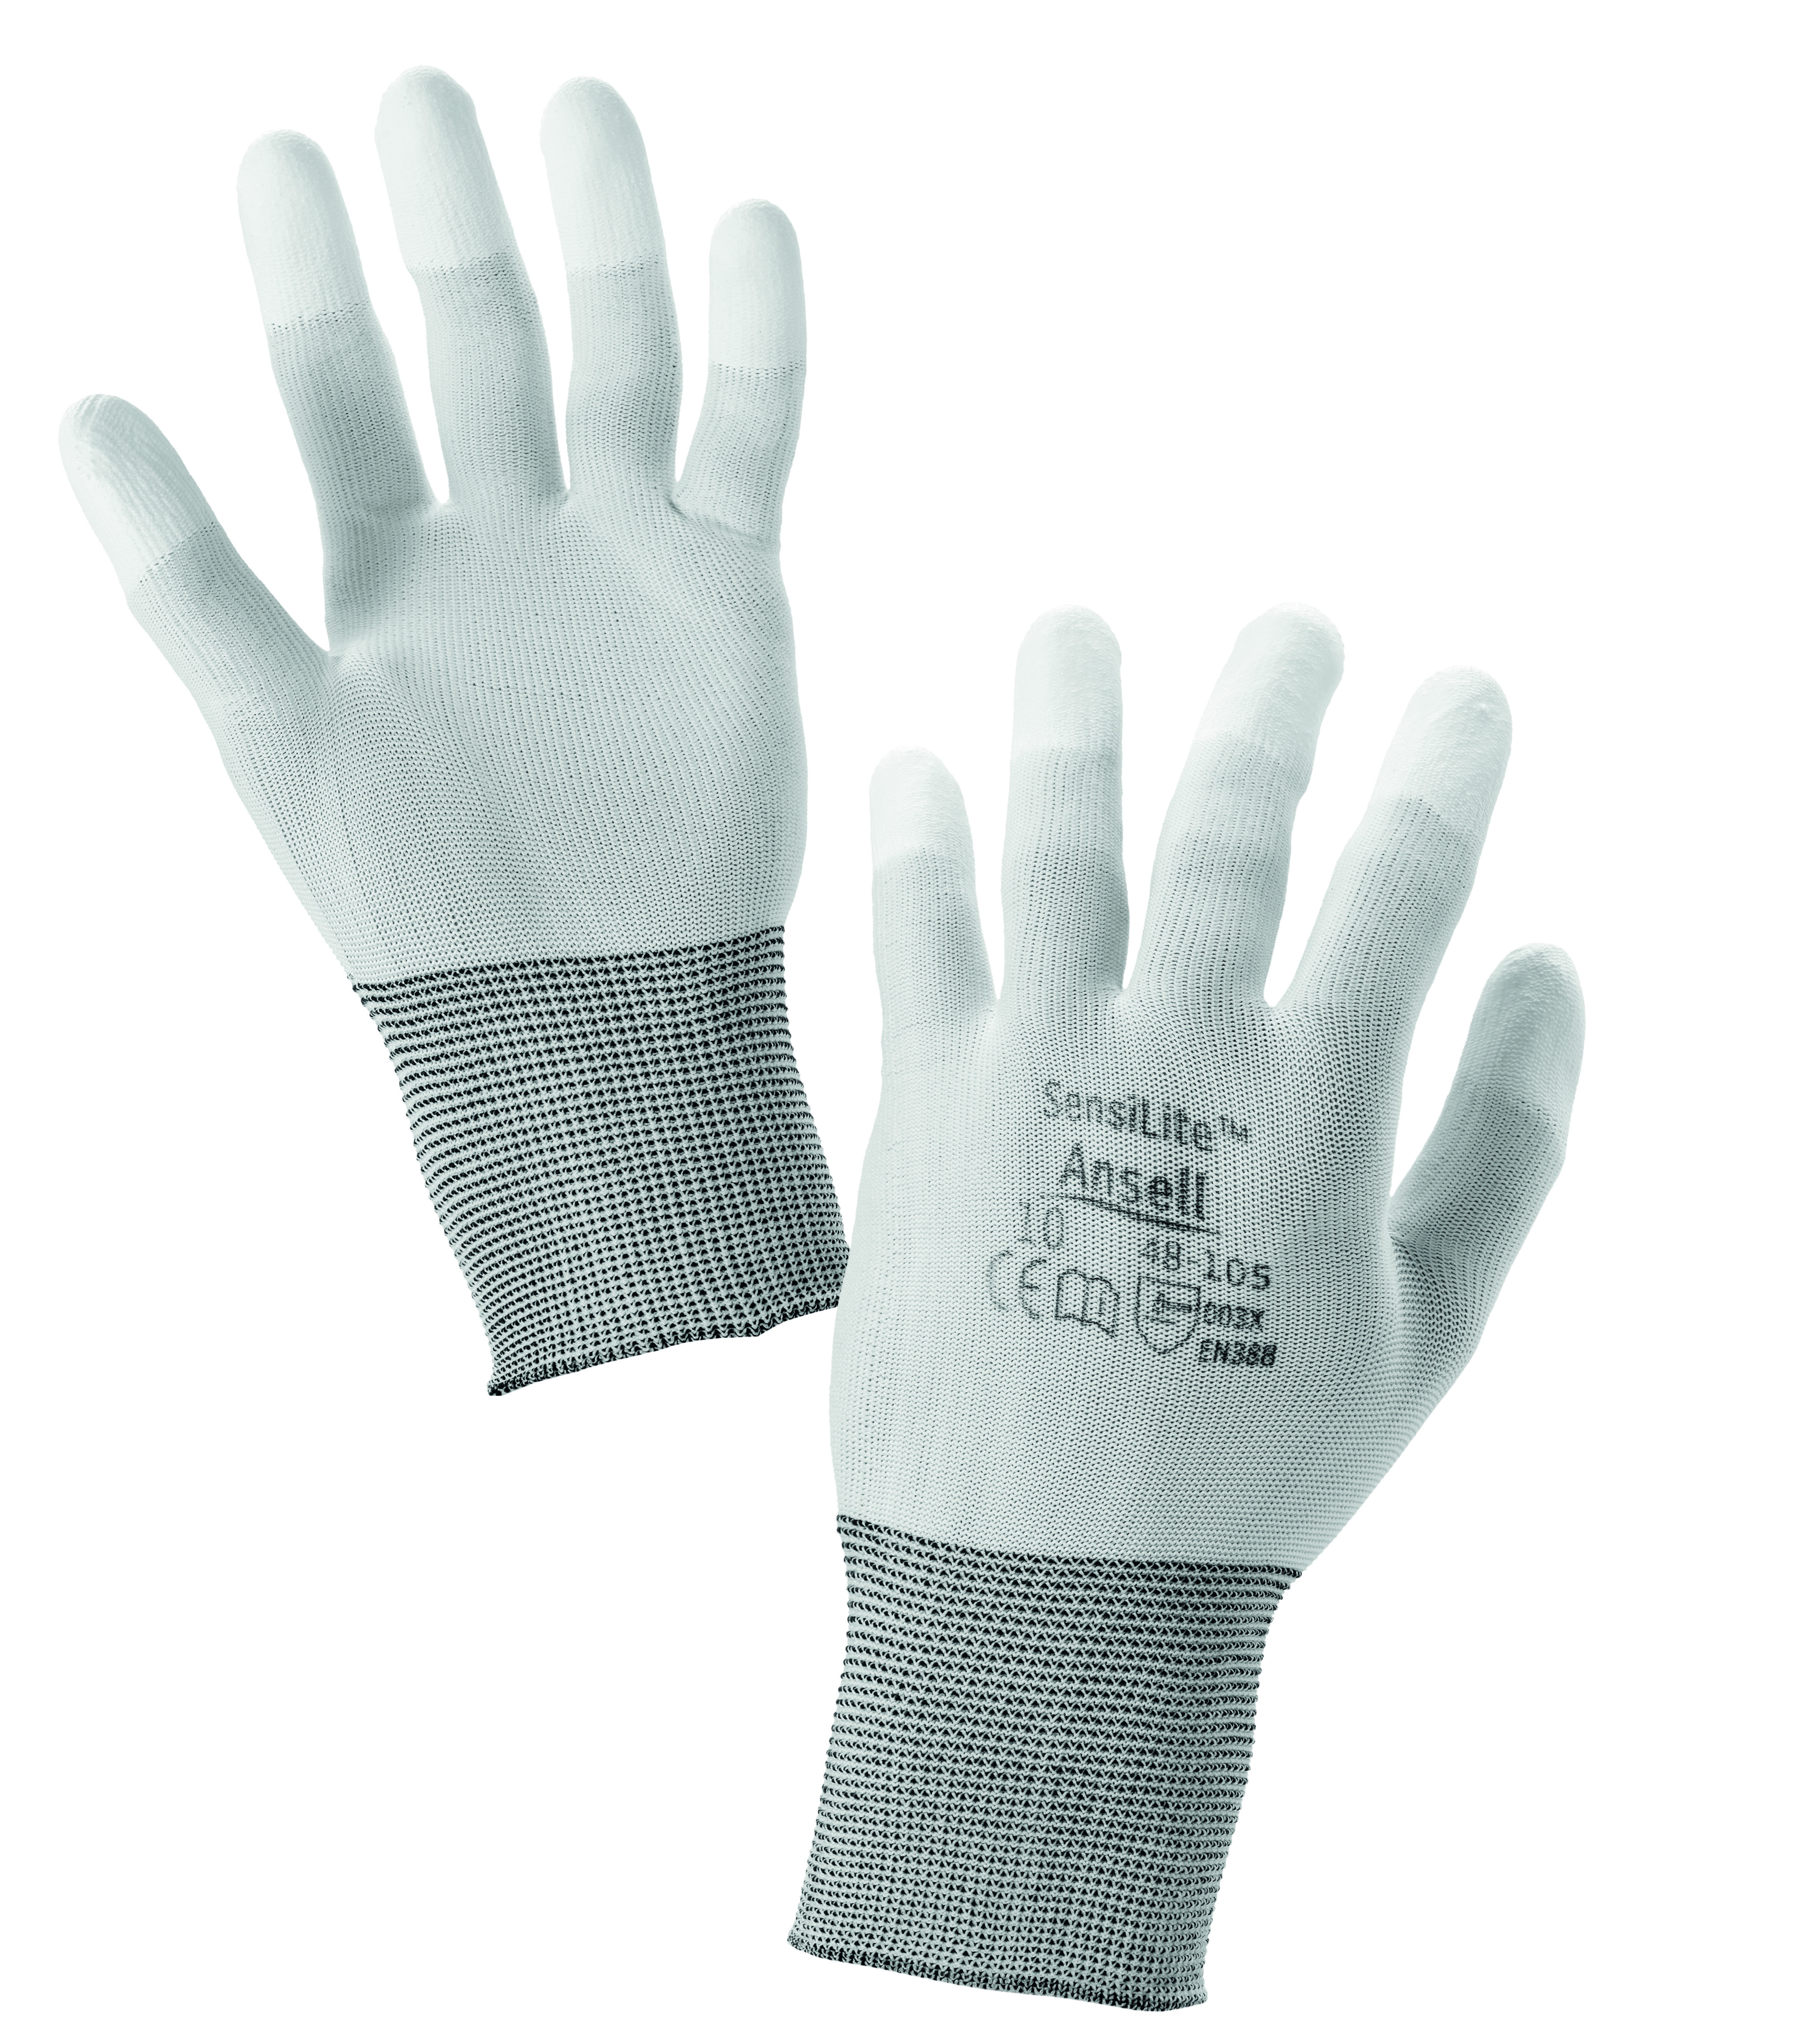 HYFLEX SENSILITE AN48-105 rukavice